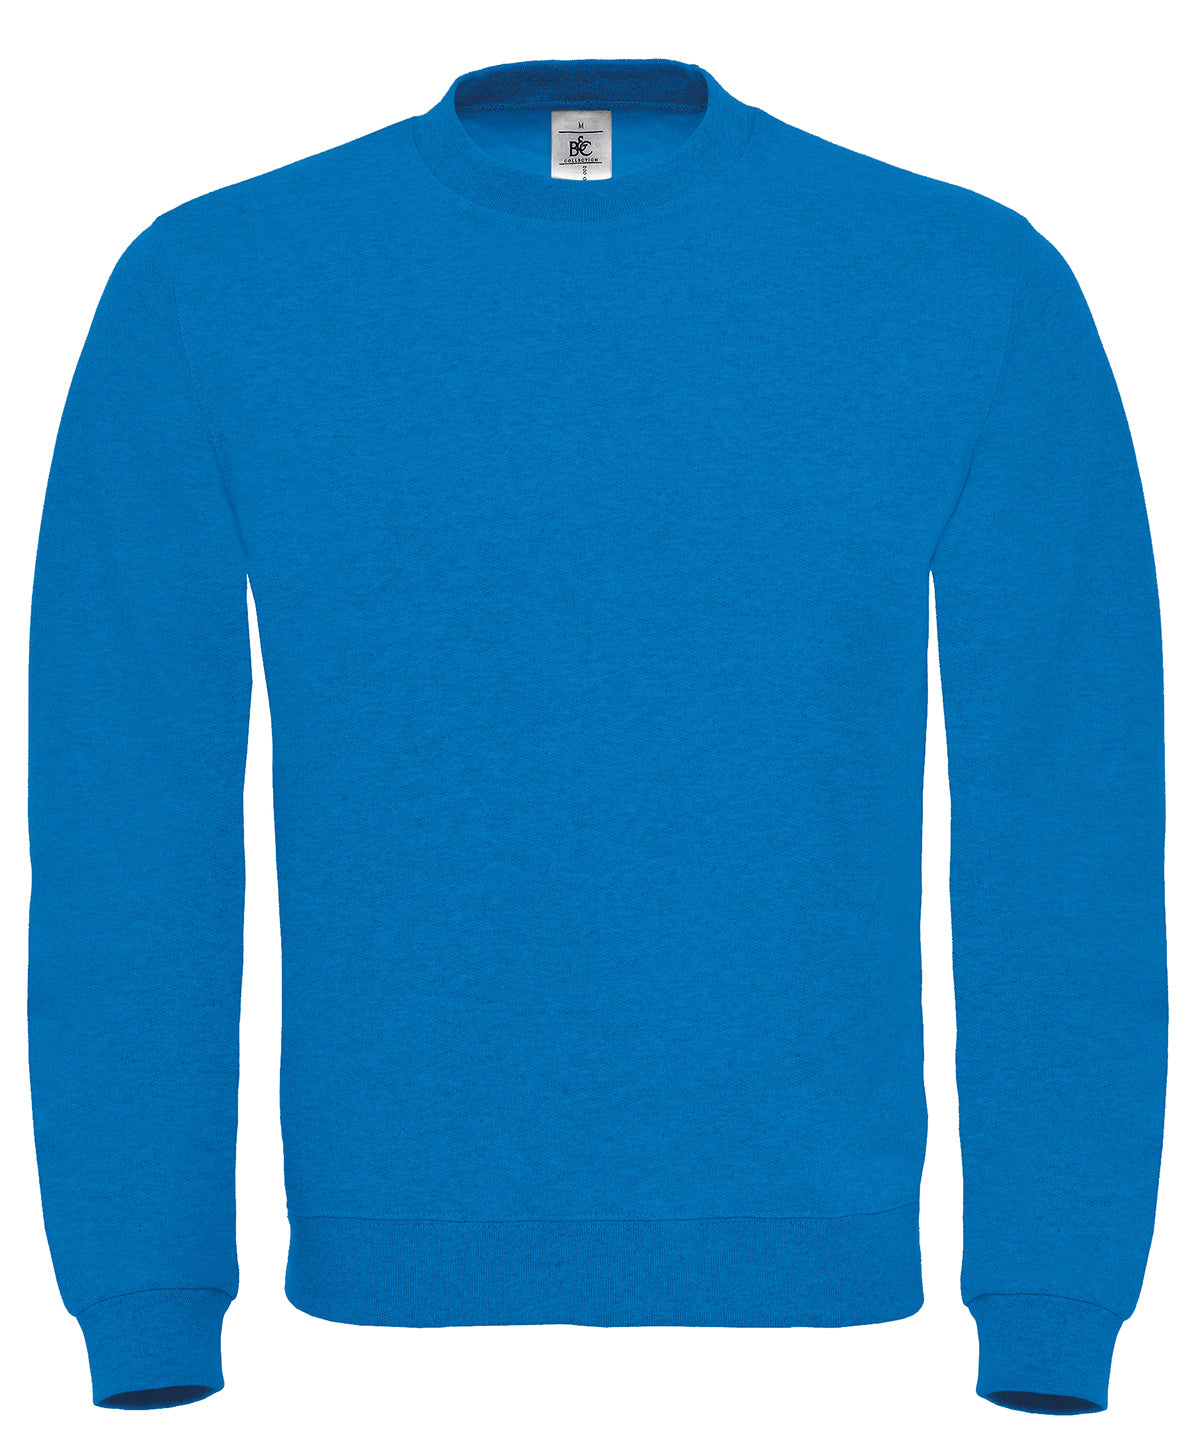 Personalised Sweatshirts - Dark Grey B&C Collection B&C ID.002 Sweatshirt